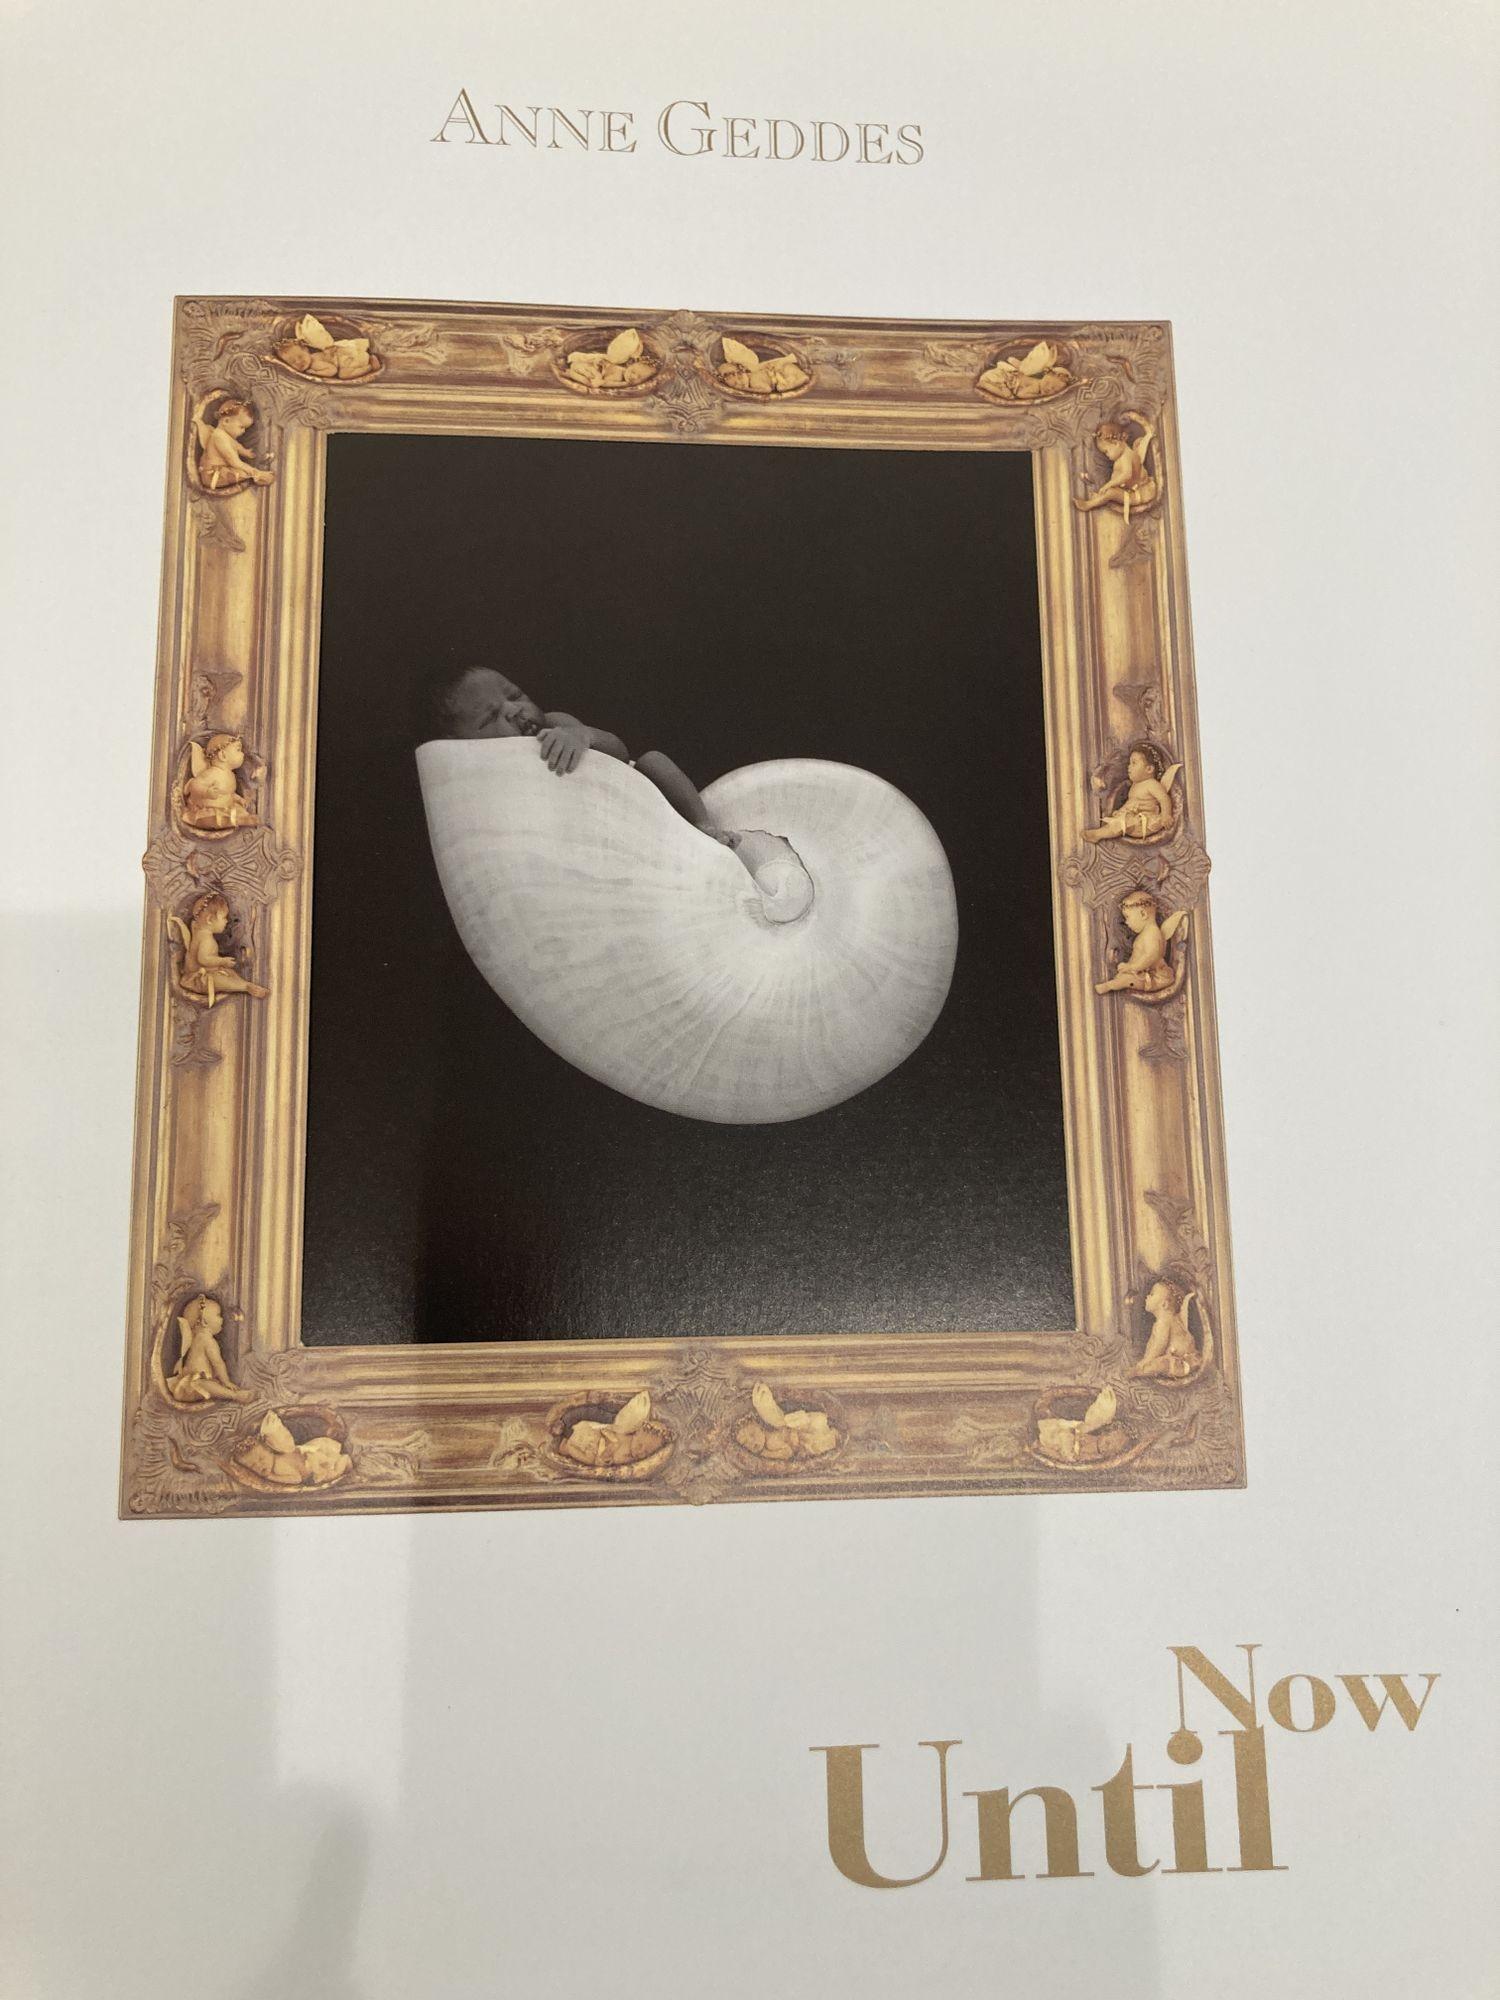 American Anne Geddes until Now Photo Folio 1st Edition 1997 For Sale